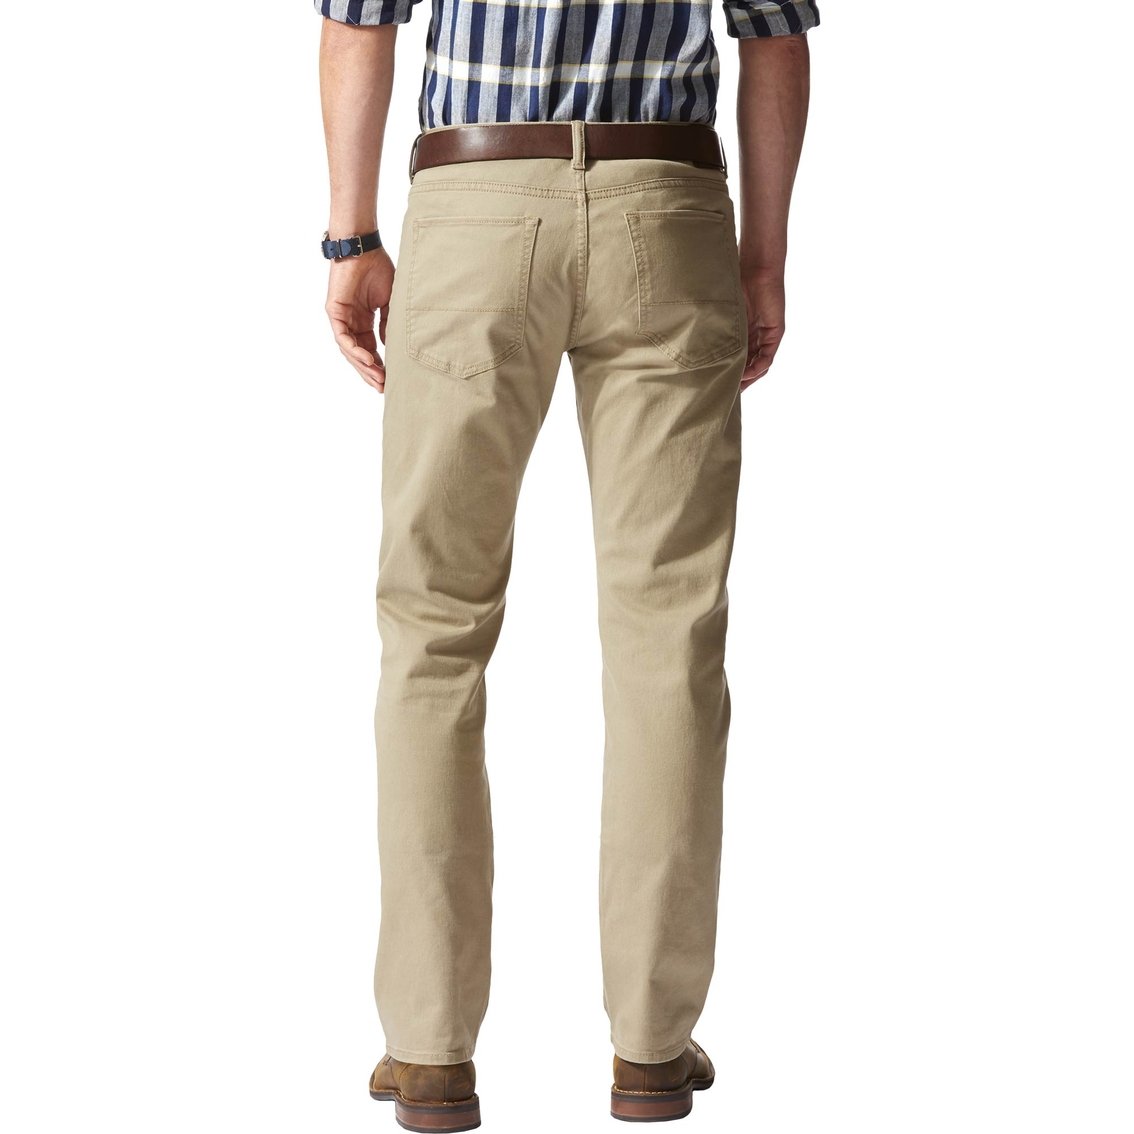 Dockers 5 Pocket Khaki Pants | Pants | Clothing & Accessories | Shop ...